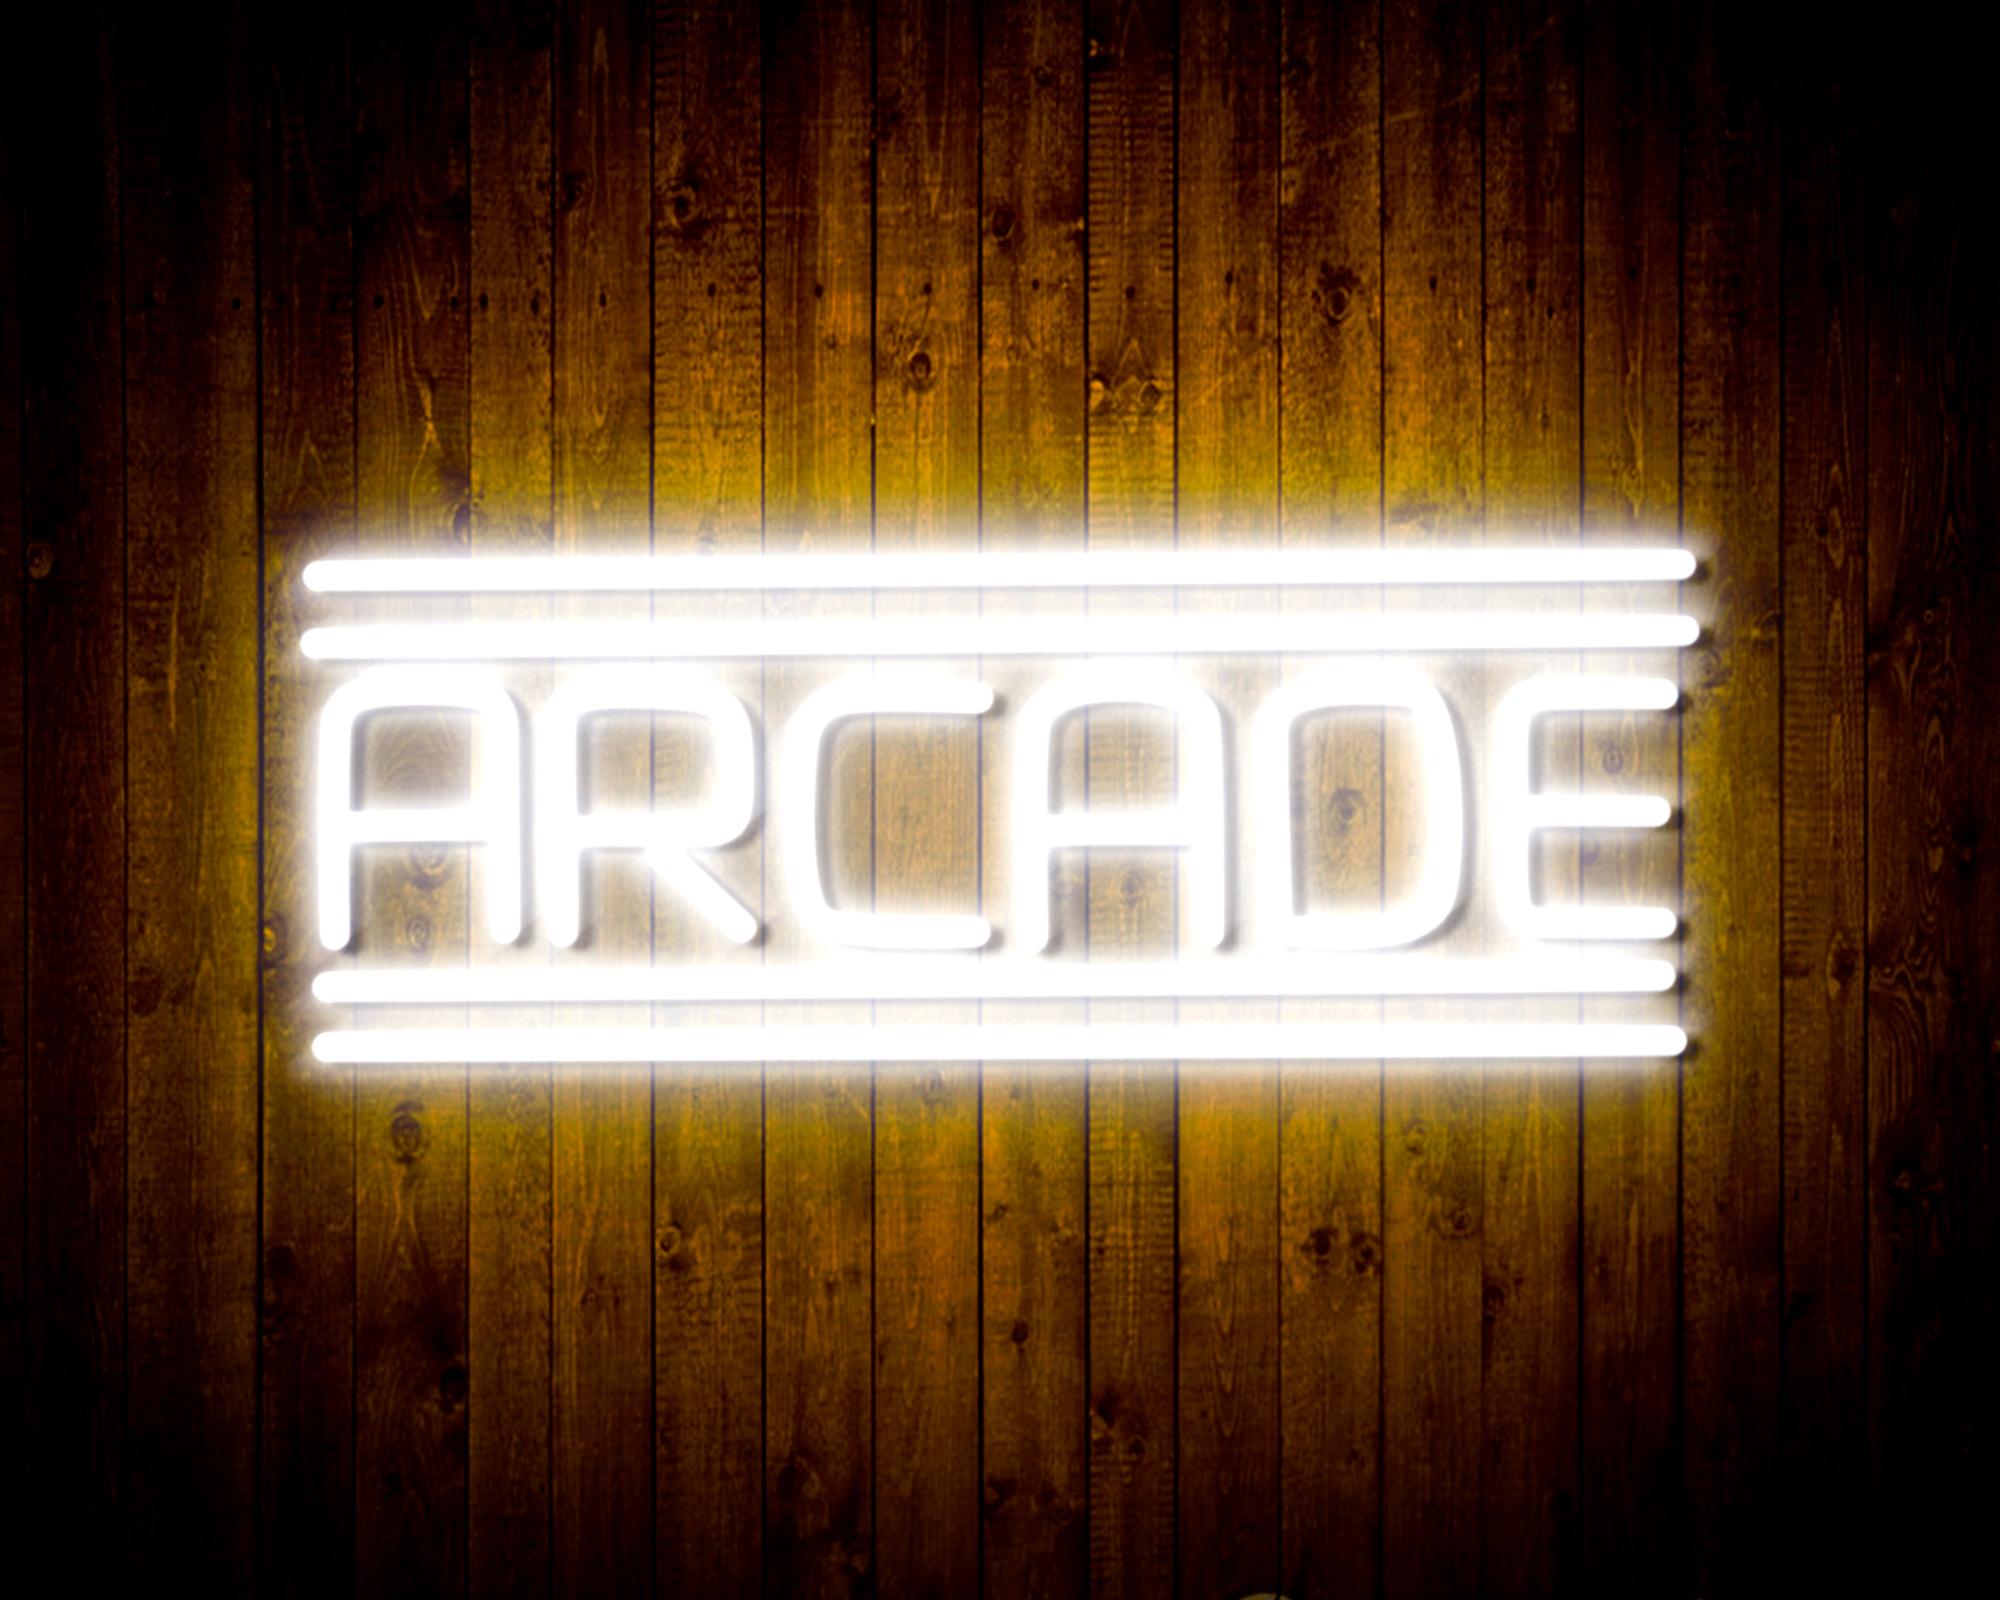 Arcade LED Neon Sign Wall Light